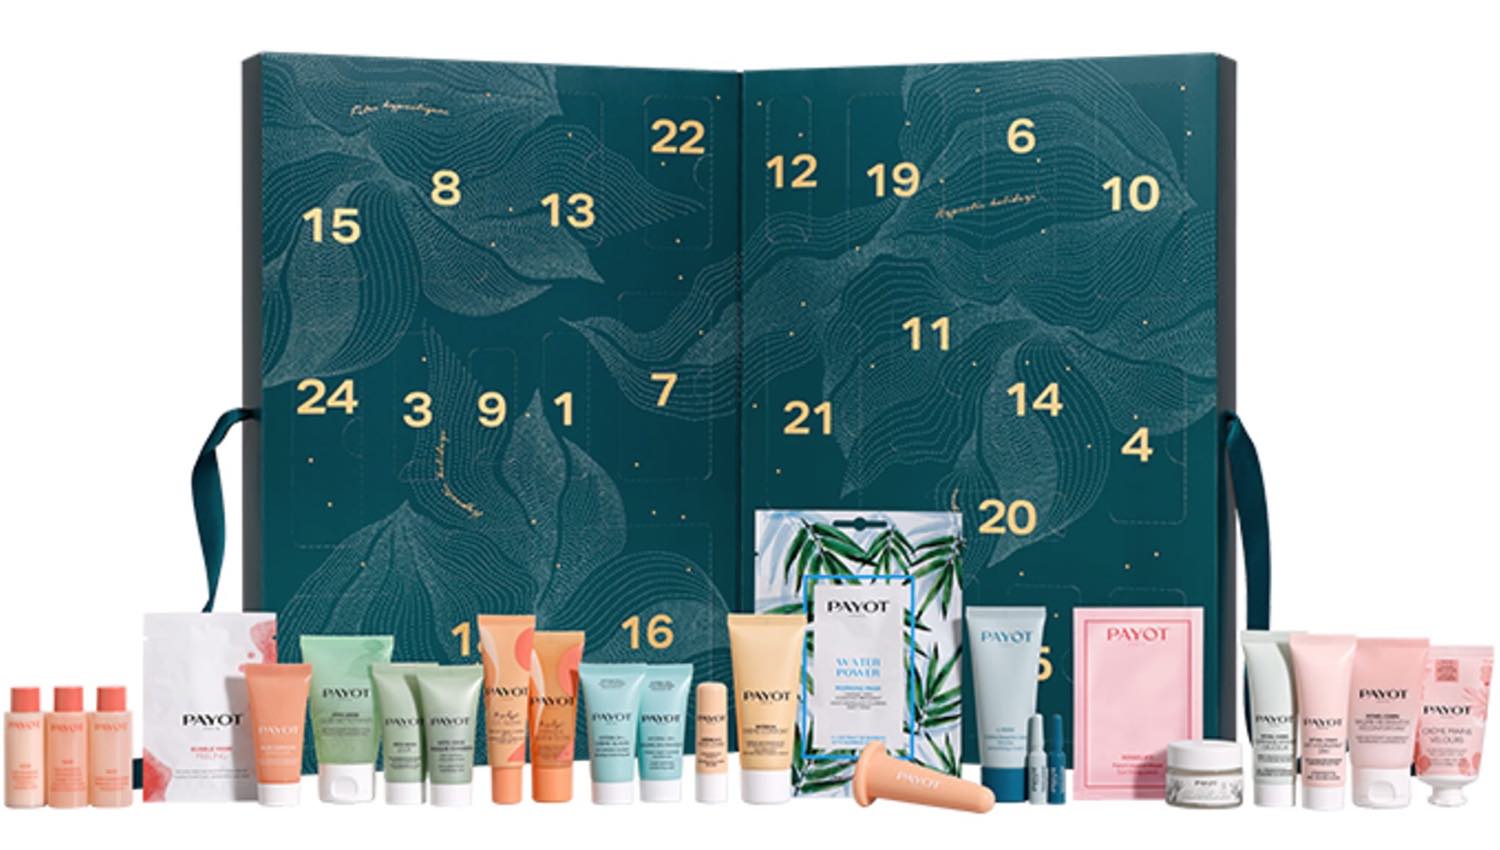 PAYOT Beauty Adventskalender 2022 Inhalt Produkte